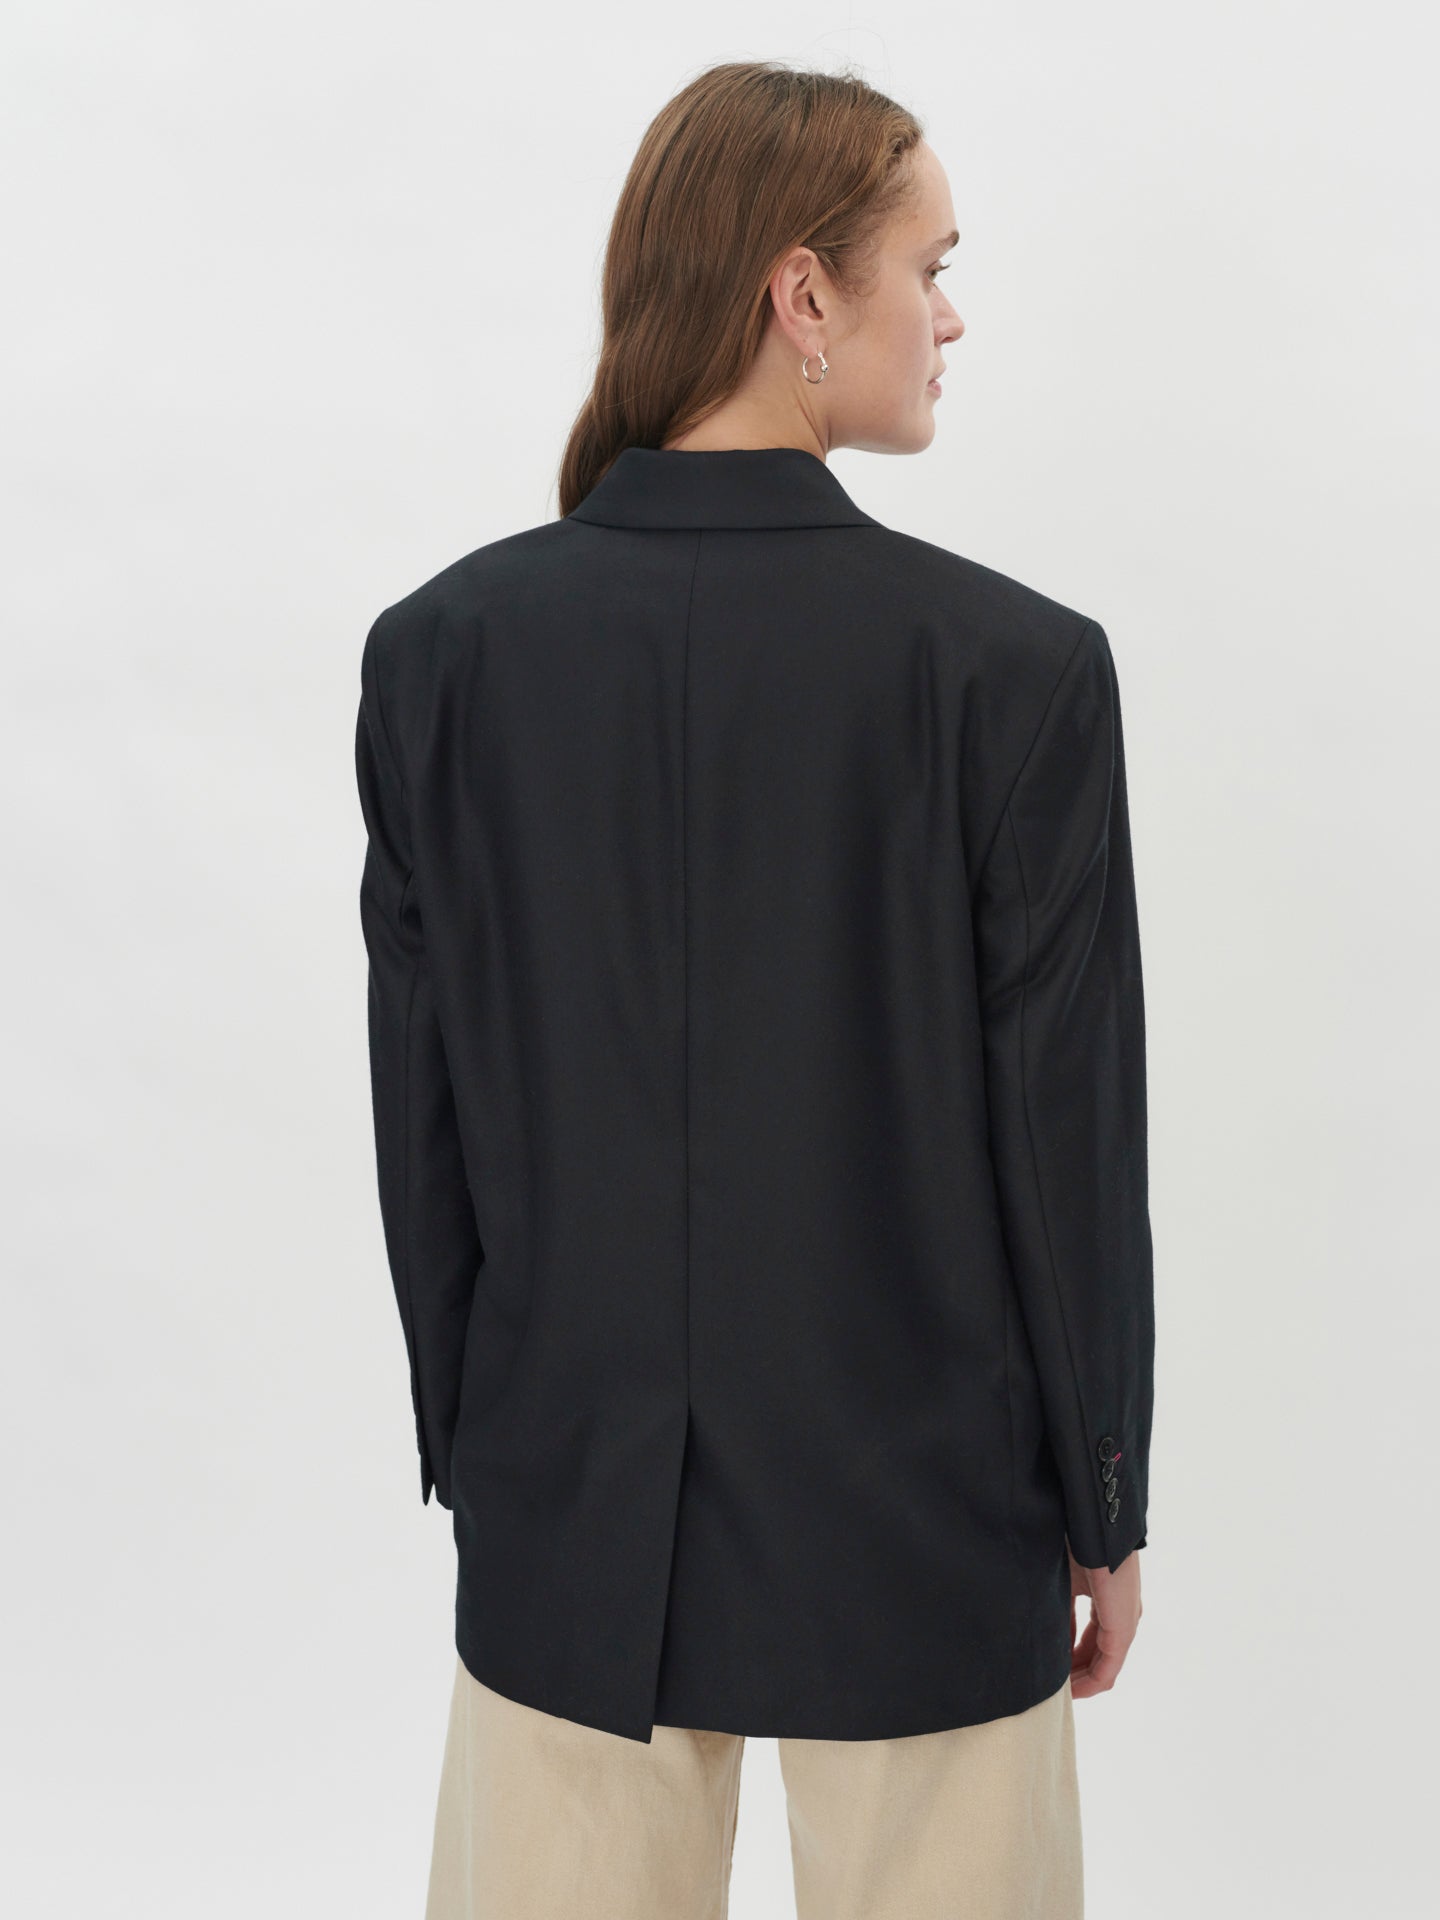 Women's Cashmere Oversized Blazer Black - Gobi Cashmere